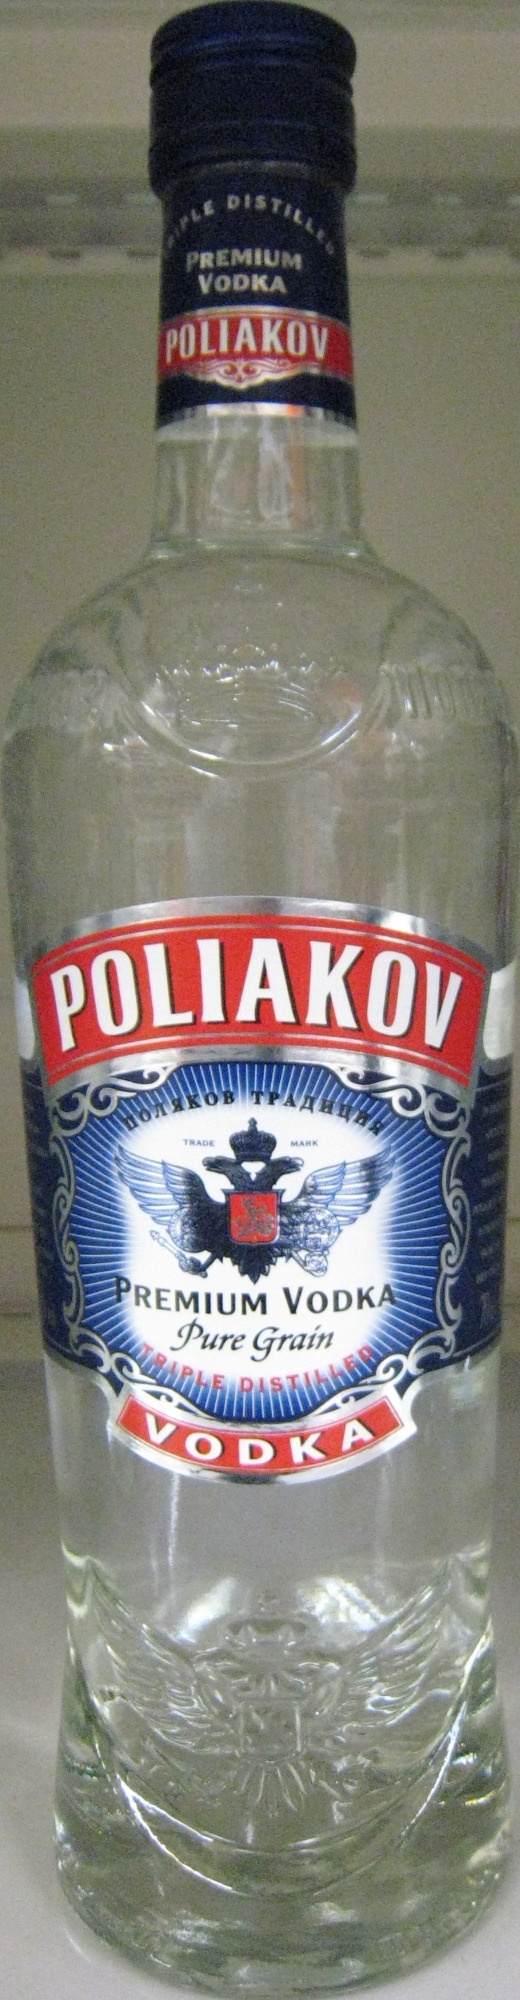 Poliakov - Produit